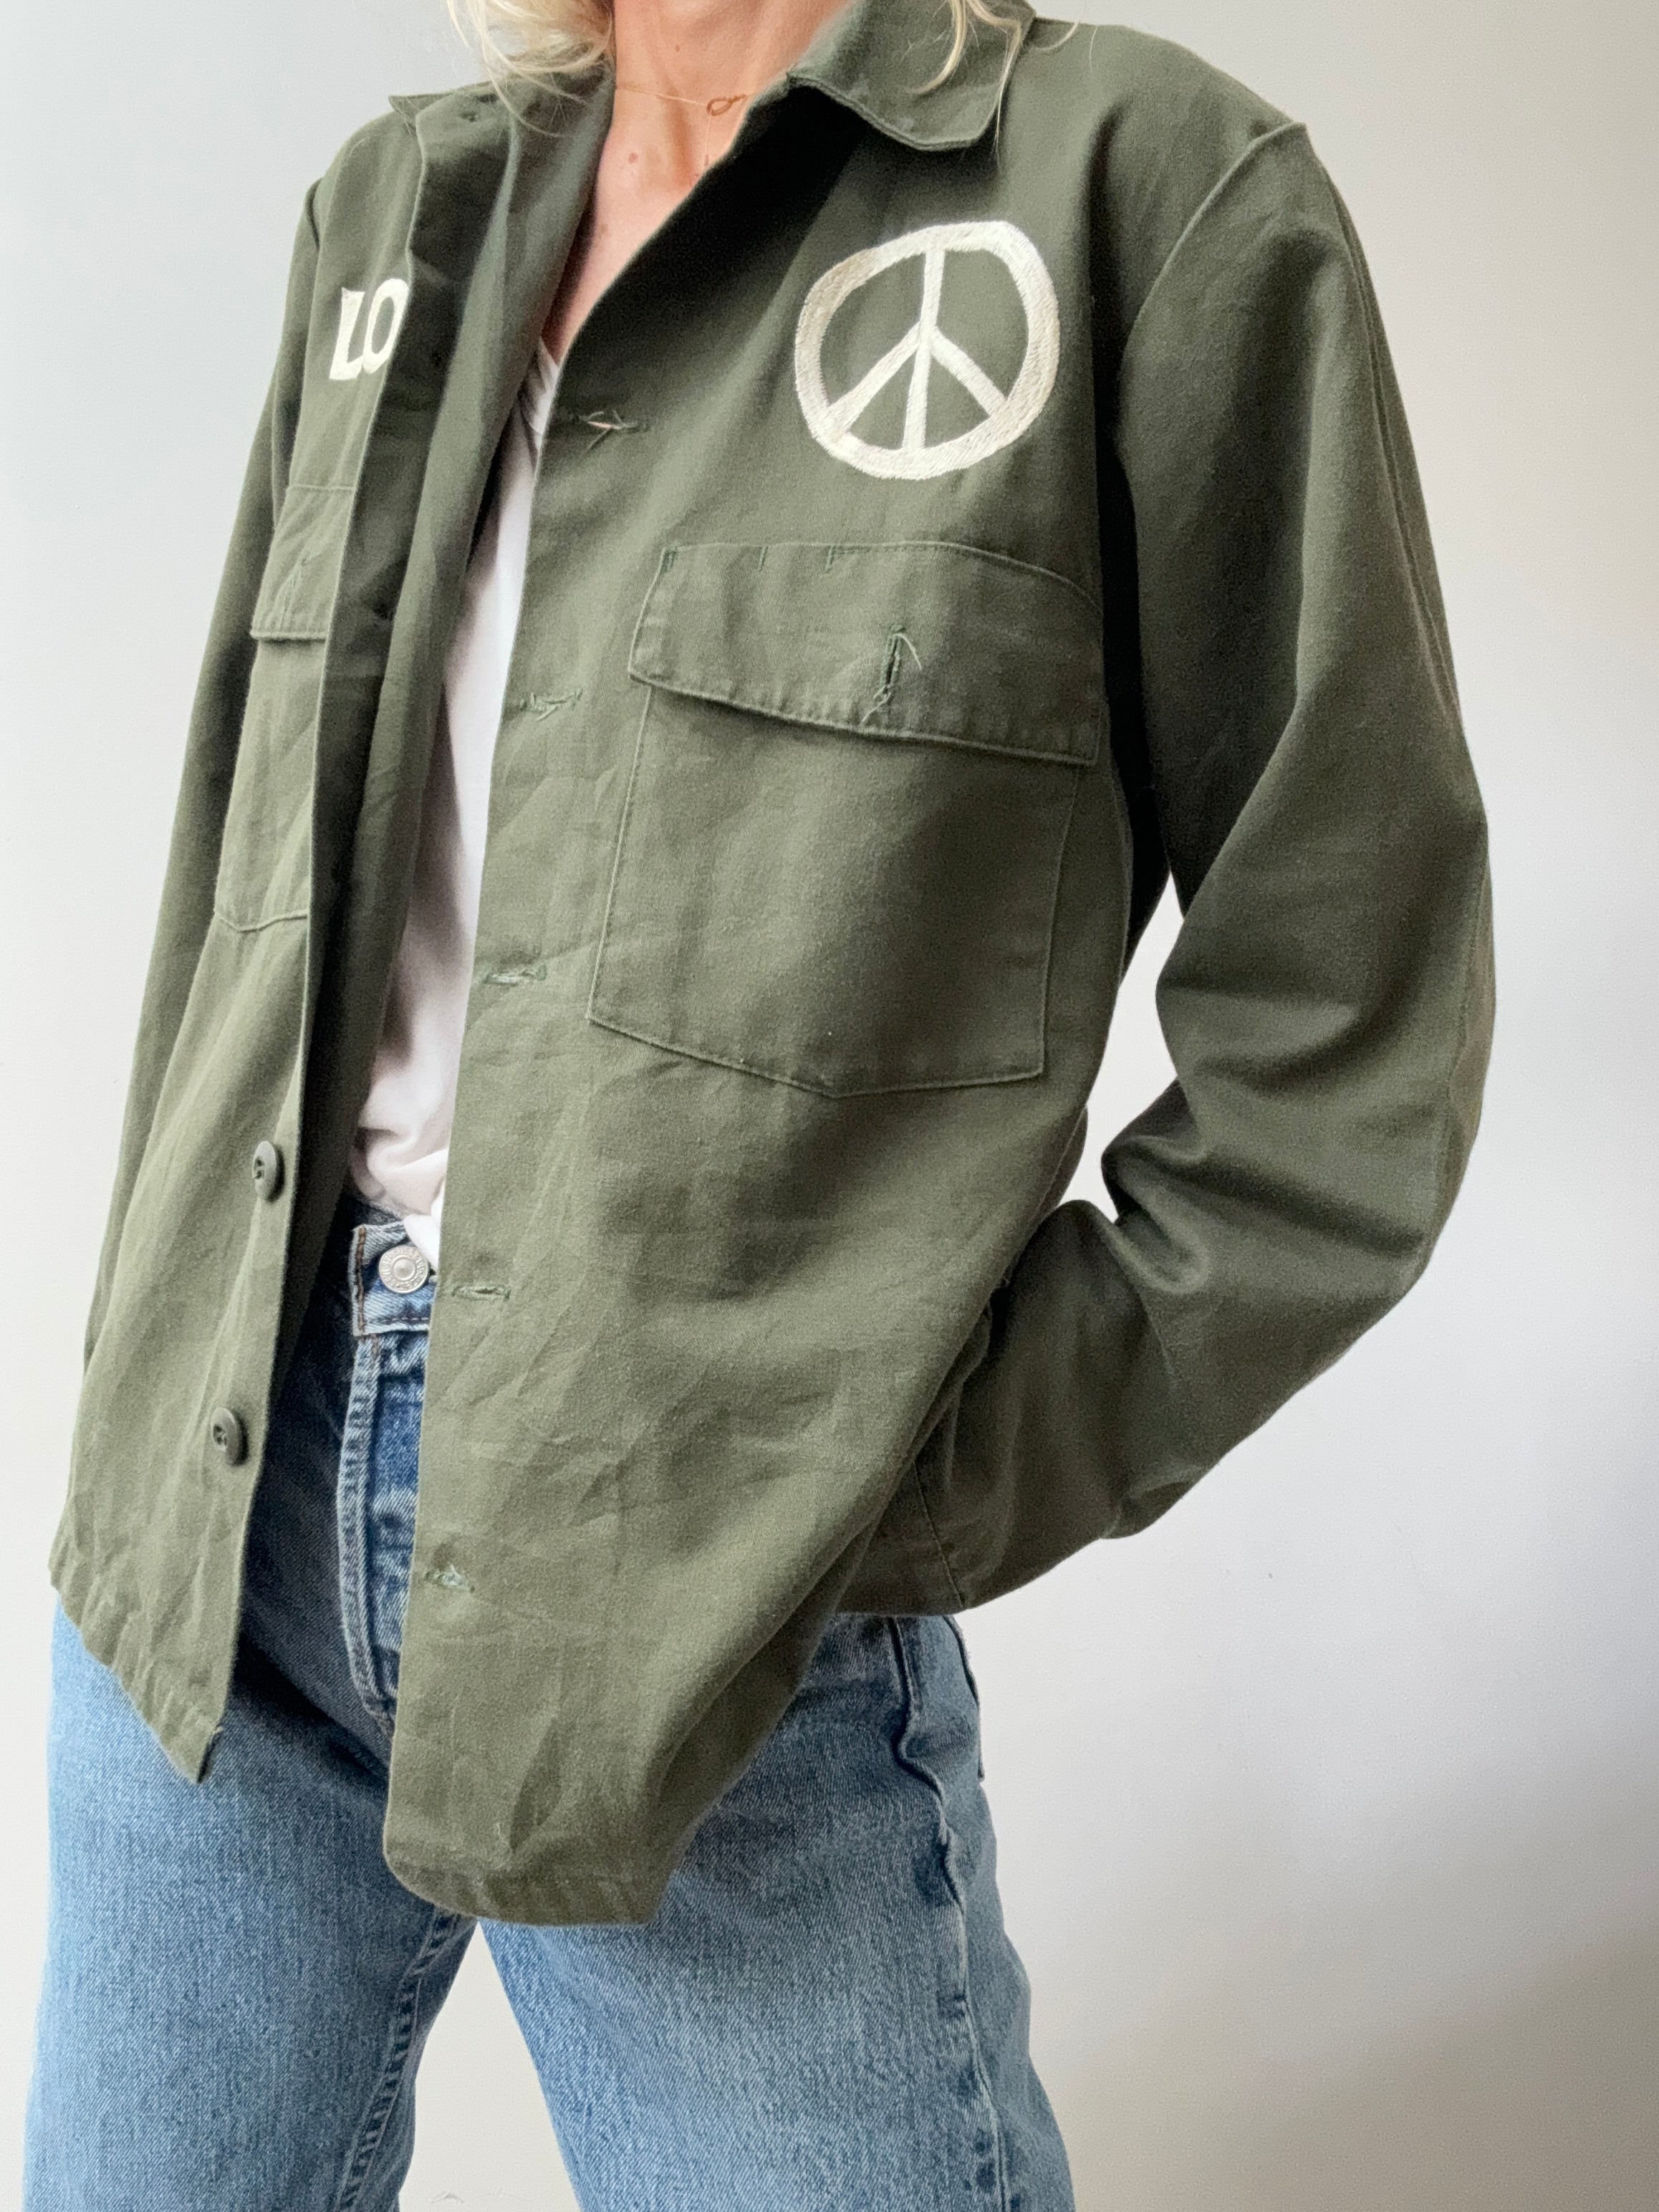 Future Nomads Shirts Small-Medium Love Peace Army Shirt AW241